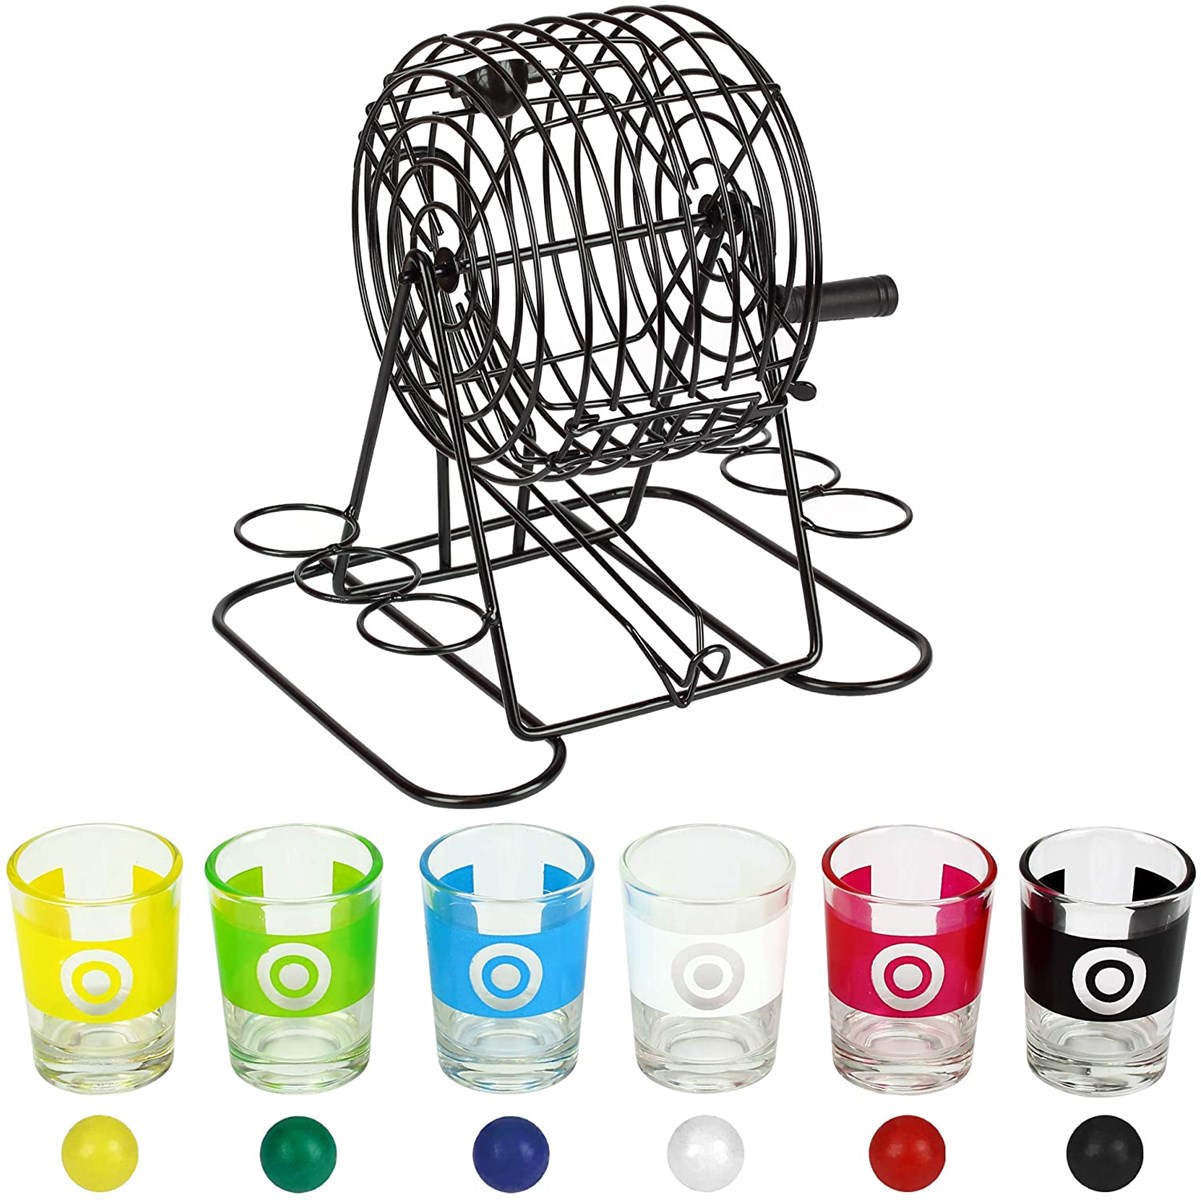 Drinking Bingo Party Game Metal Bingo Cage 48 Colored Bingo Balls and 6 Glass Shot Glasses Fun Drinking Game